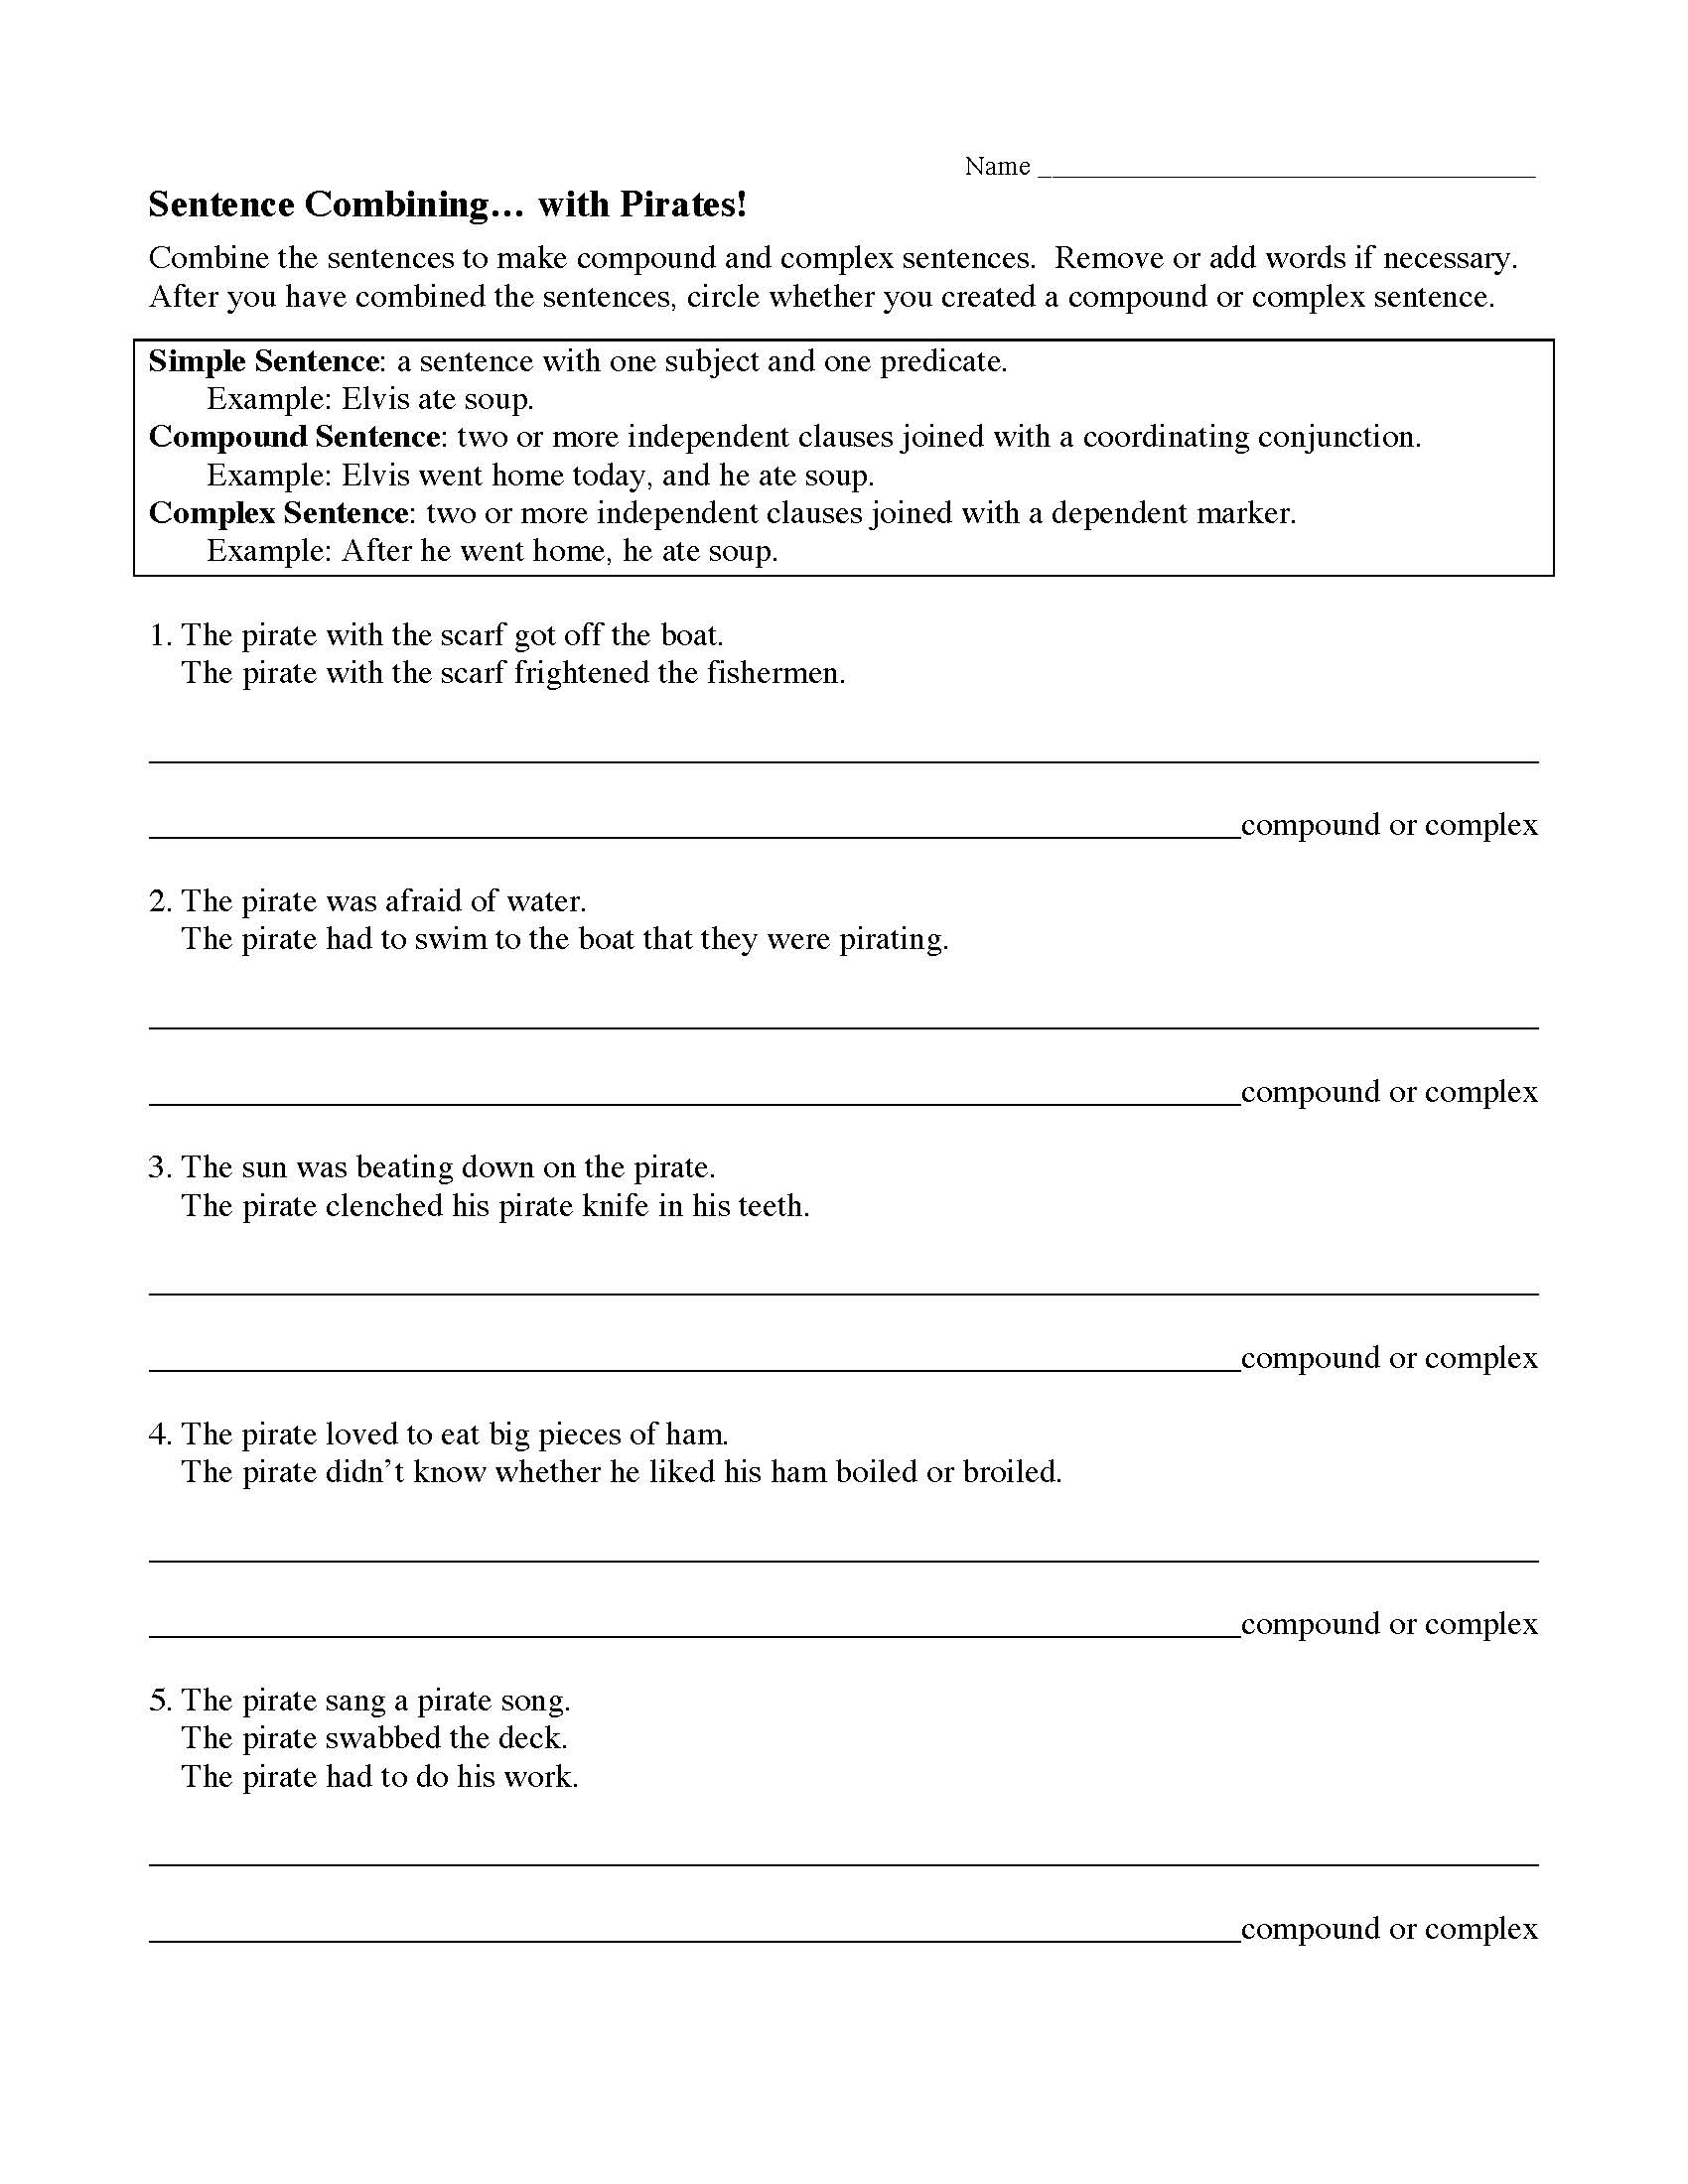 Sentences Combining with Pirates Worksheet  Preview With Compound Sentences Worksheet With Answers